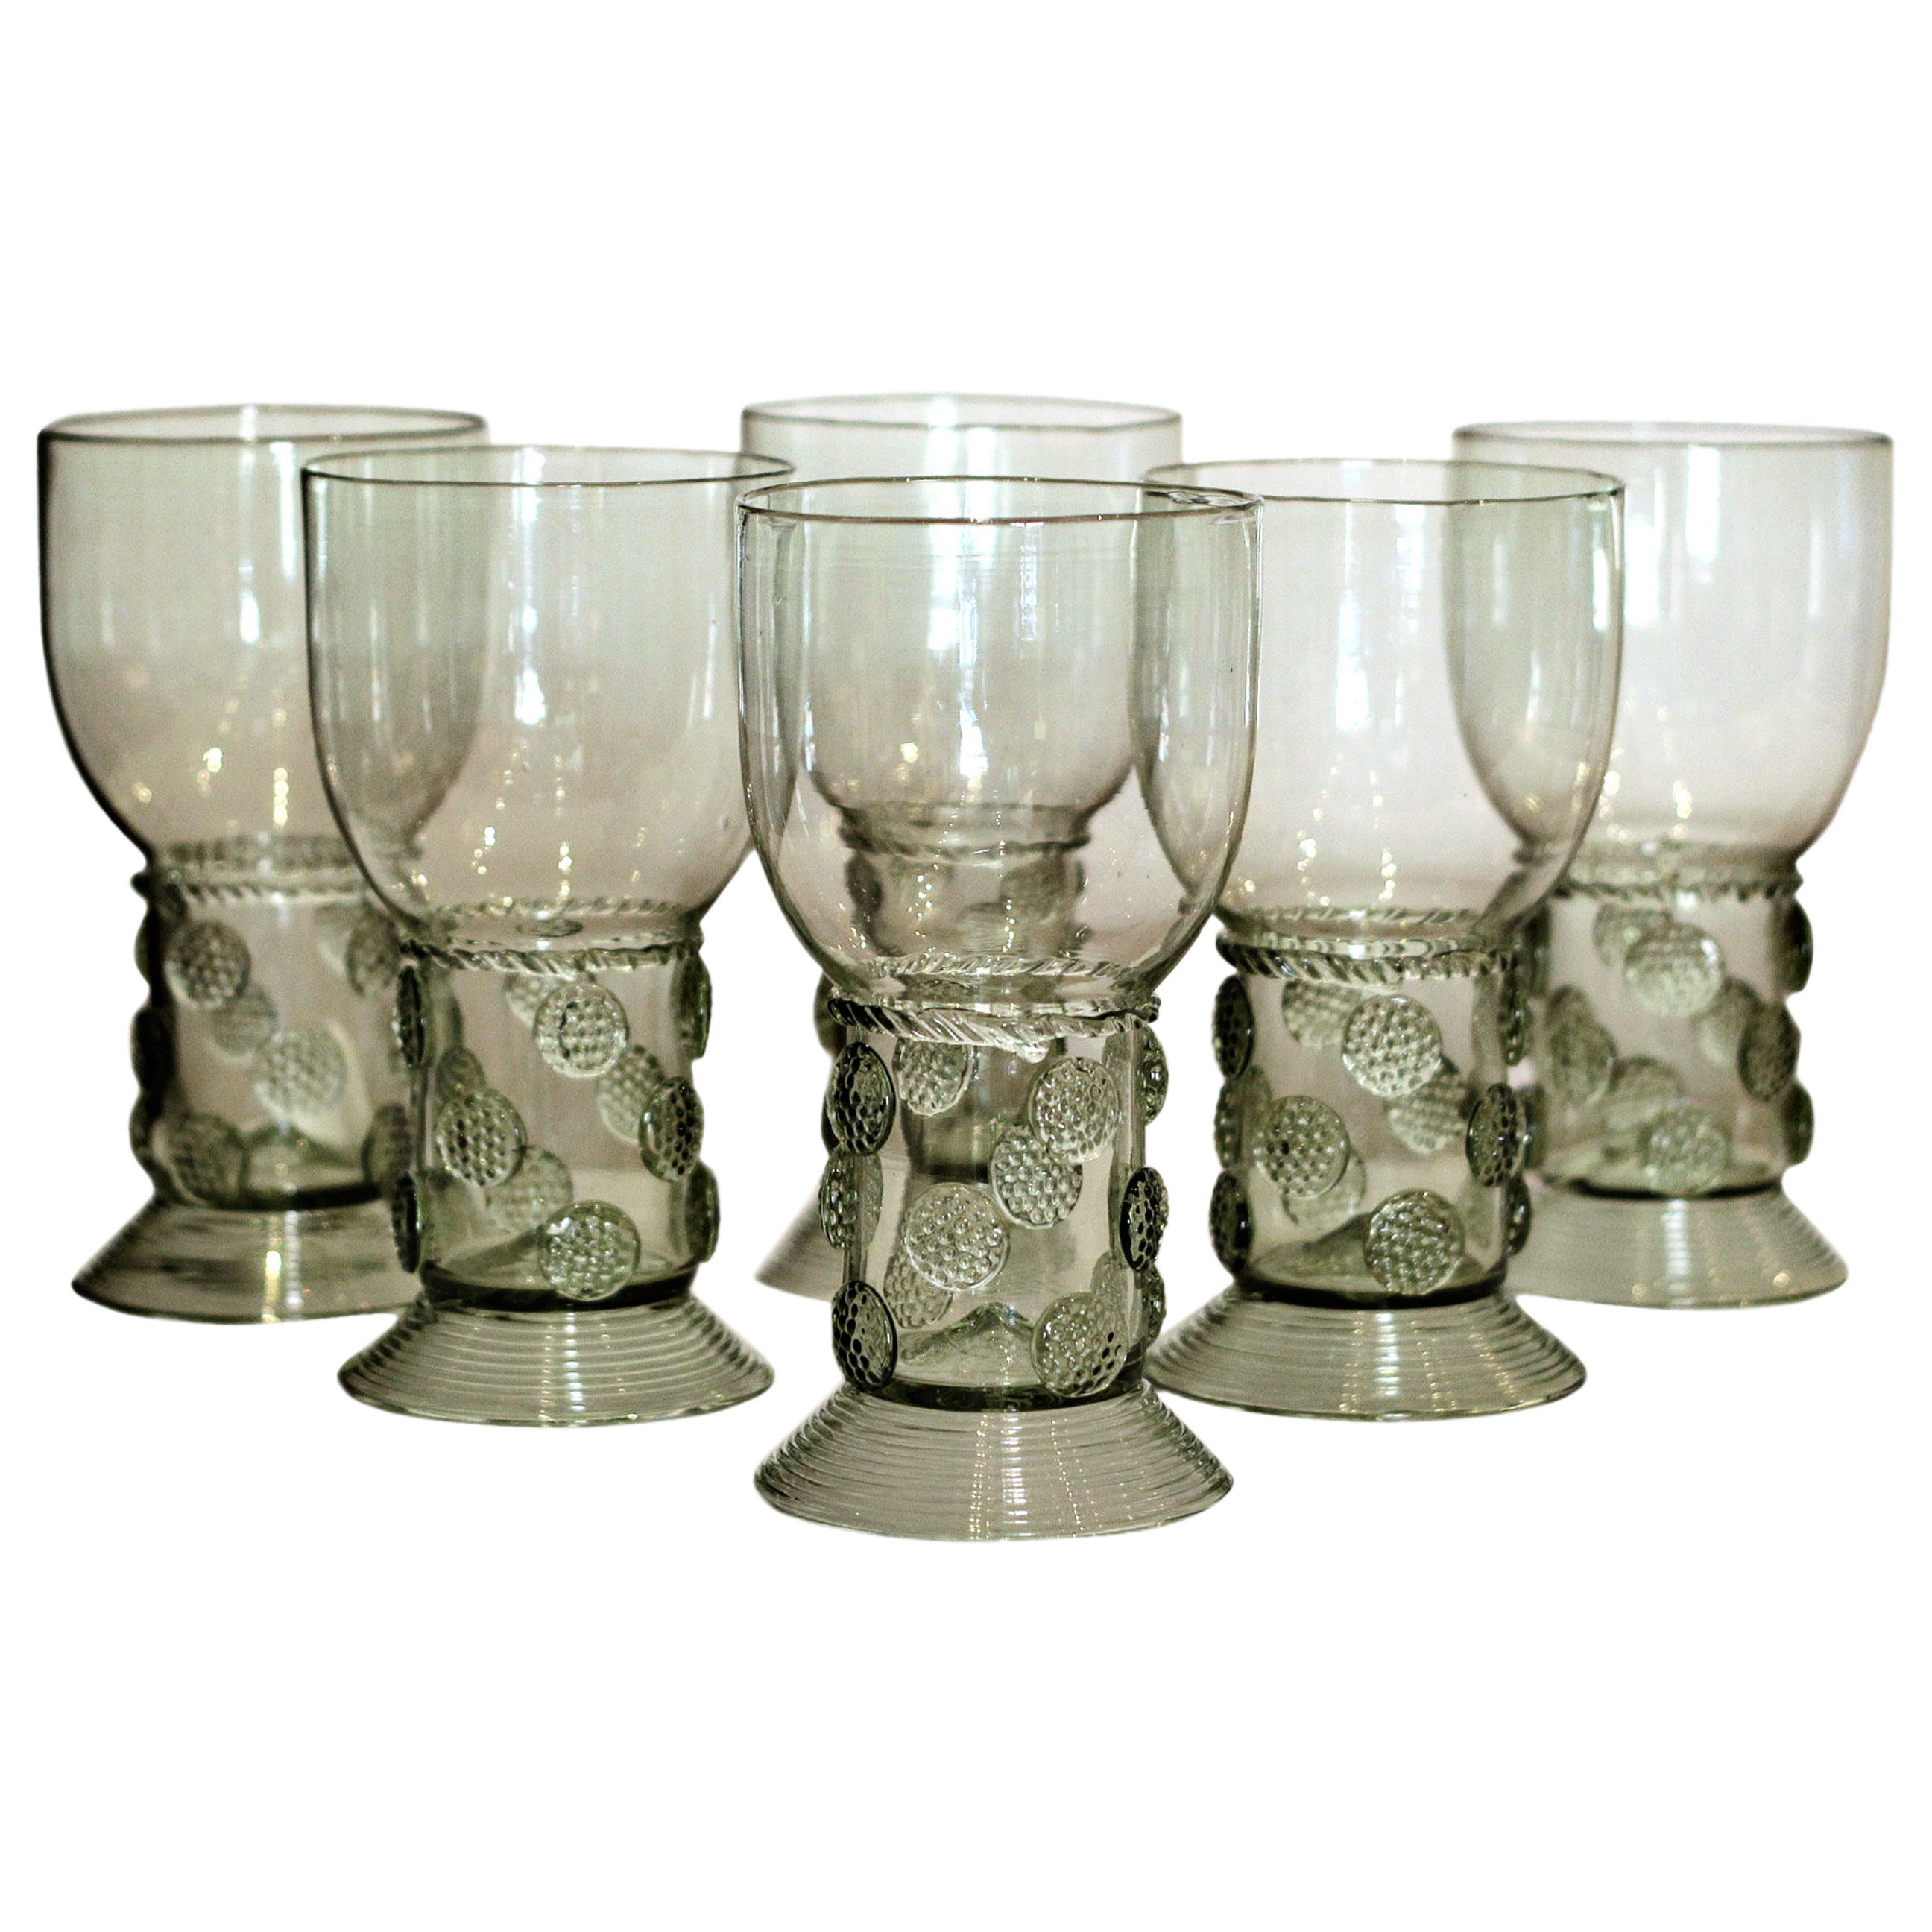 Set of Six Large Handblown Water Glasses